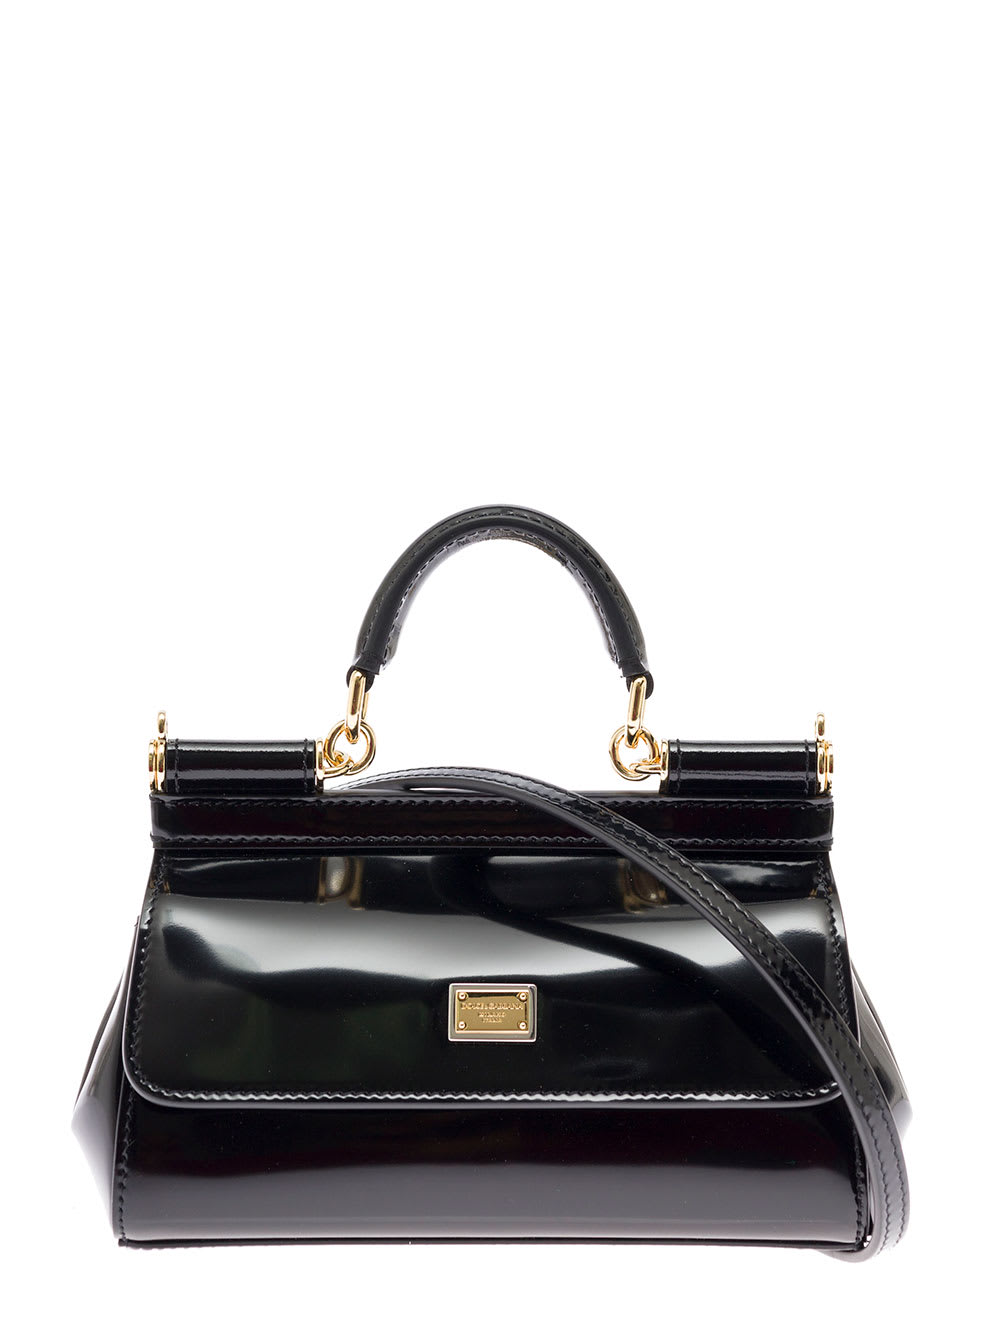 Dolce & Gabbana Womans Sicily Black Patent Classic Handbag